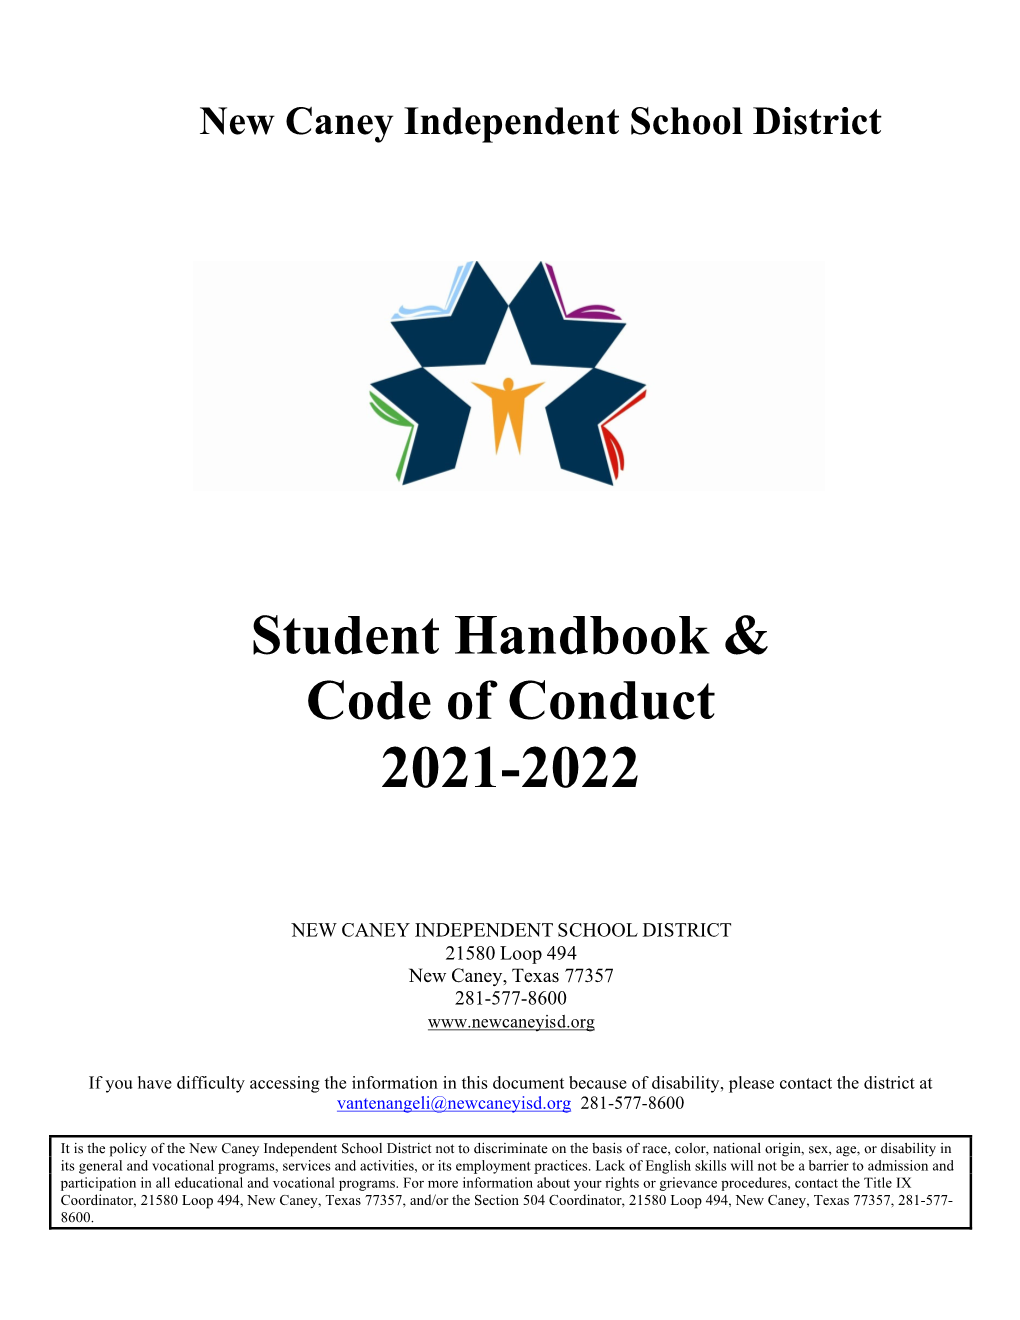 Student Handbook & Code of Conduct